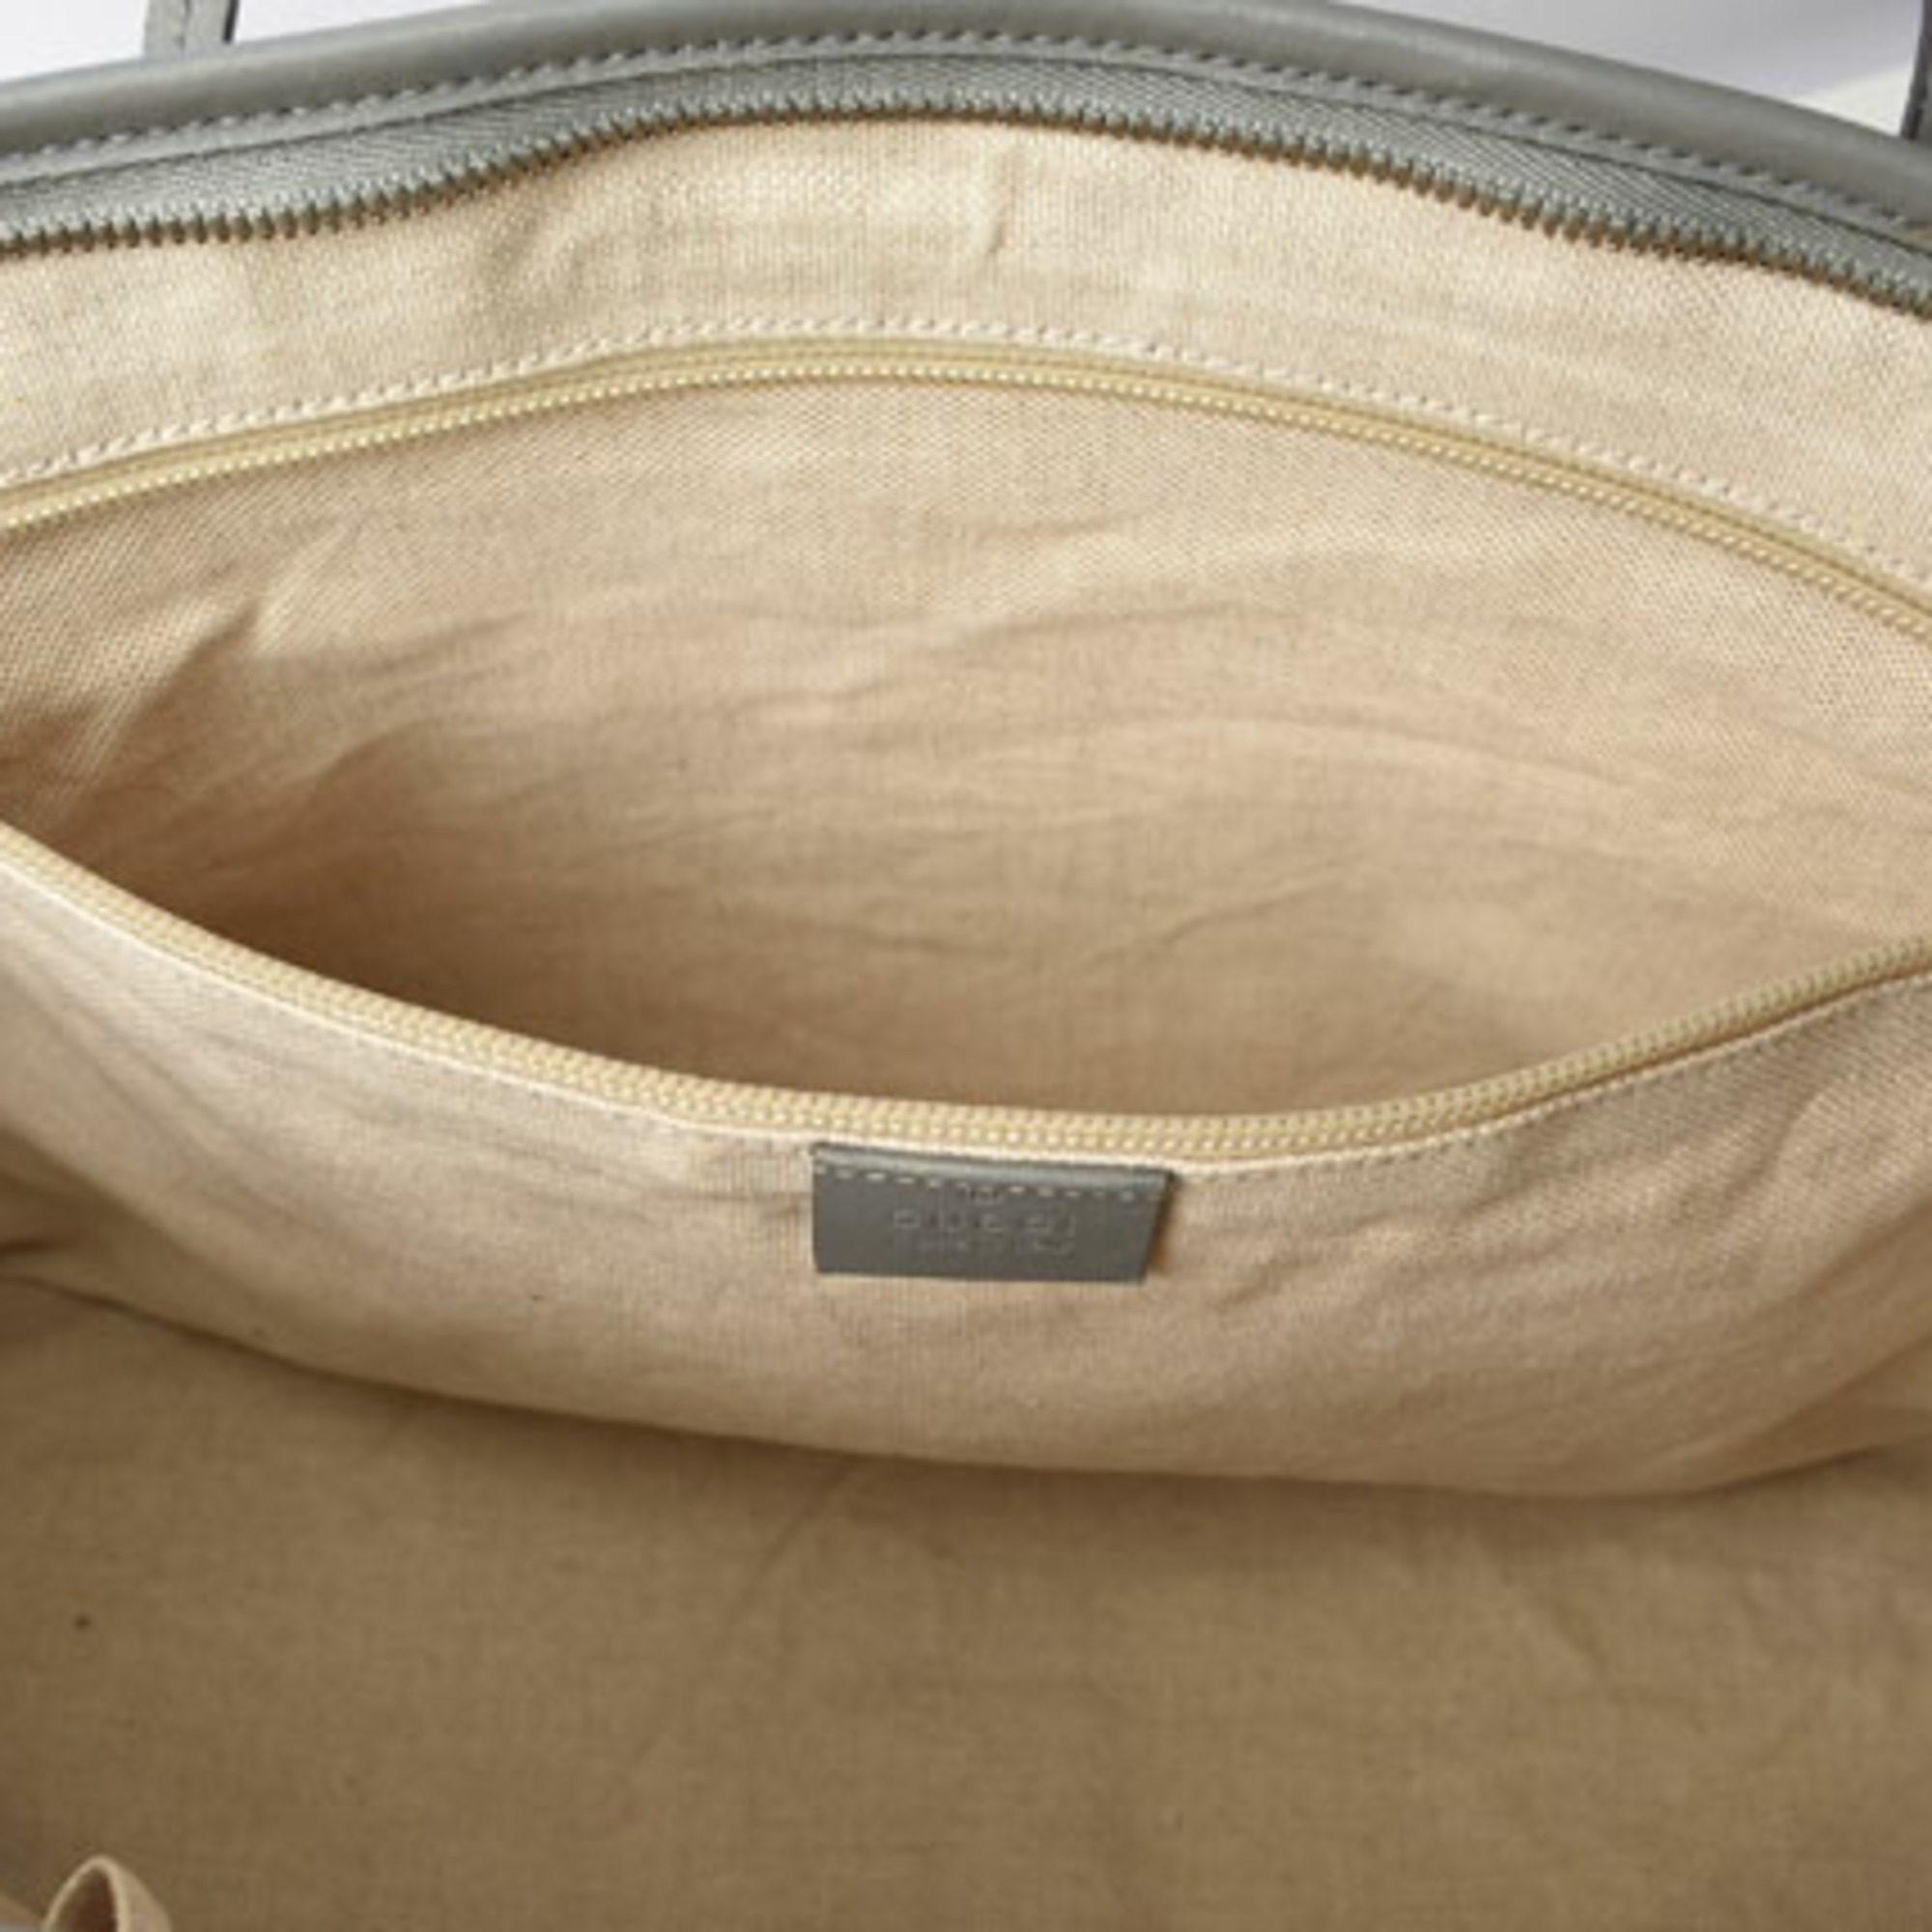 Gucci Tote Bag Shoulder GUCCI GG Supreme Canvas Medium Light Gray Beige 353437